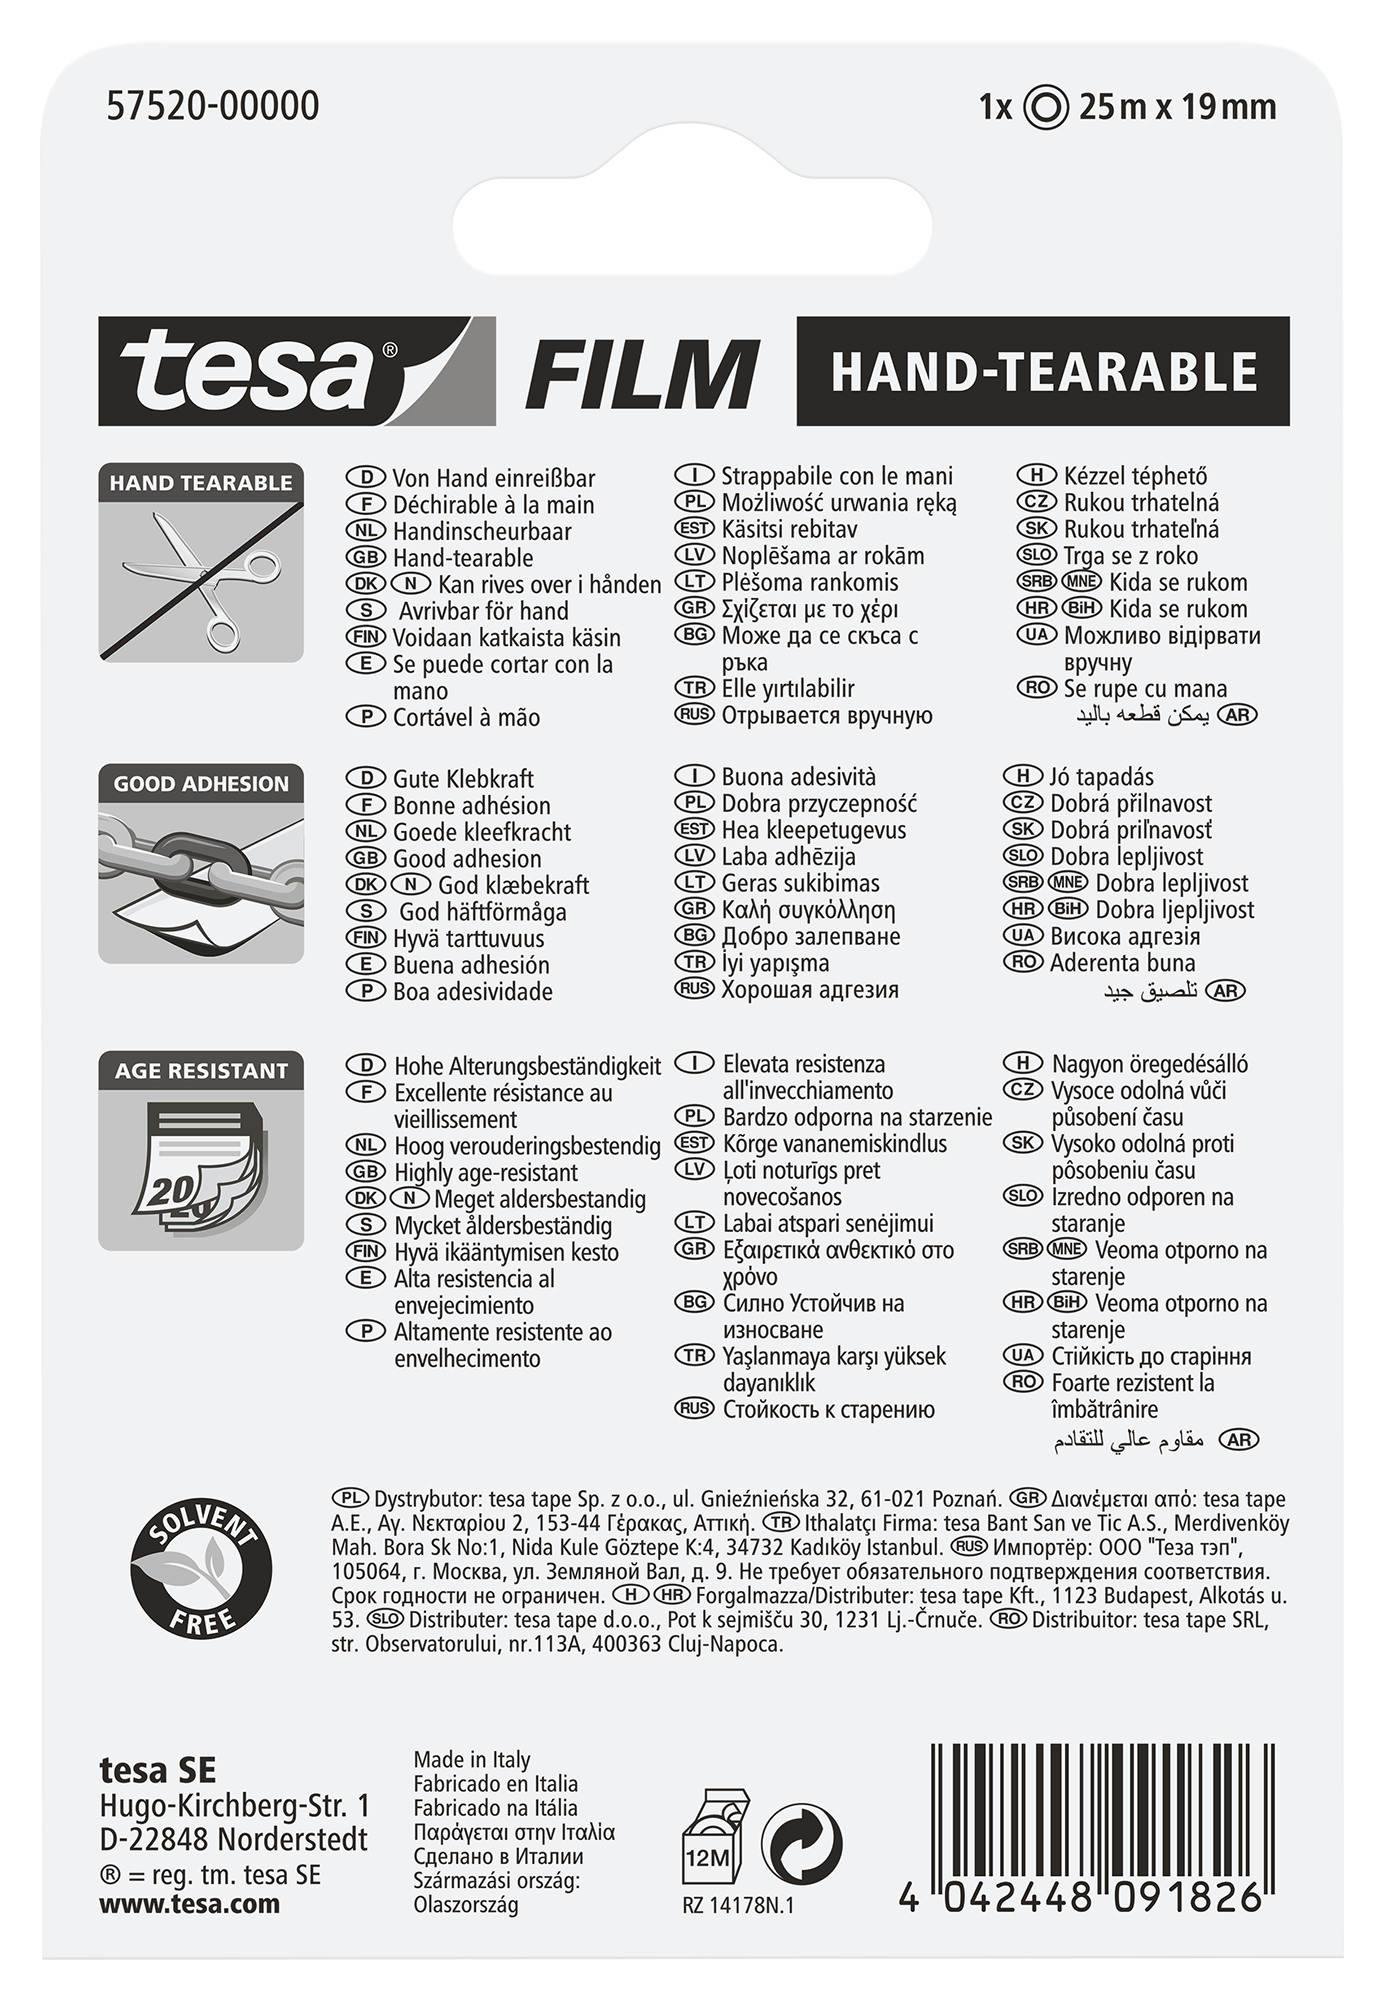 TESA Tesafilm 25mx19mm 57520-00000 transparent 1 roul.